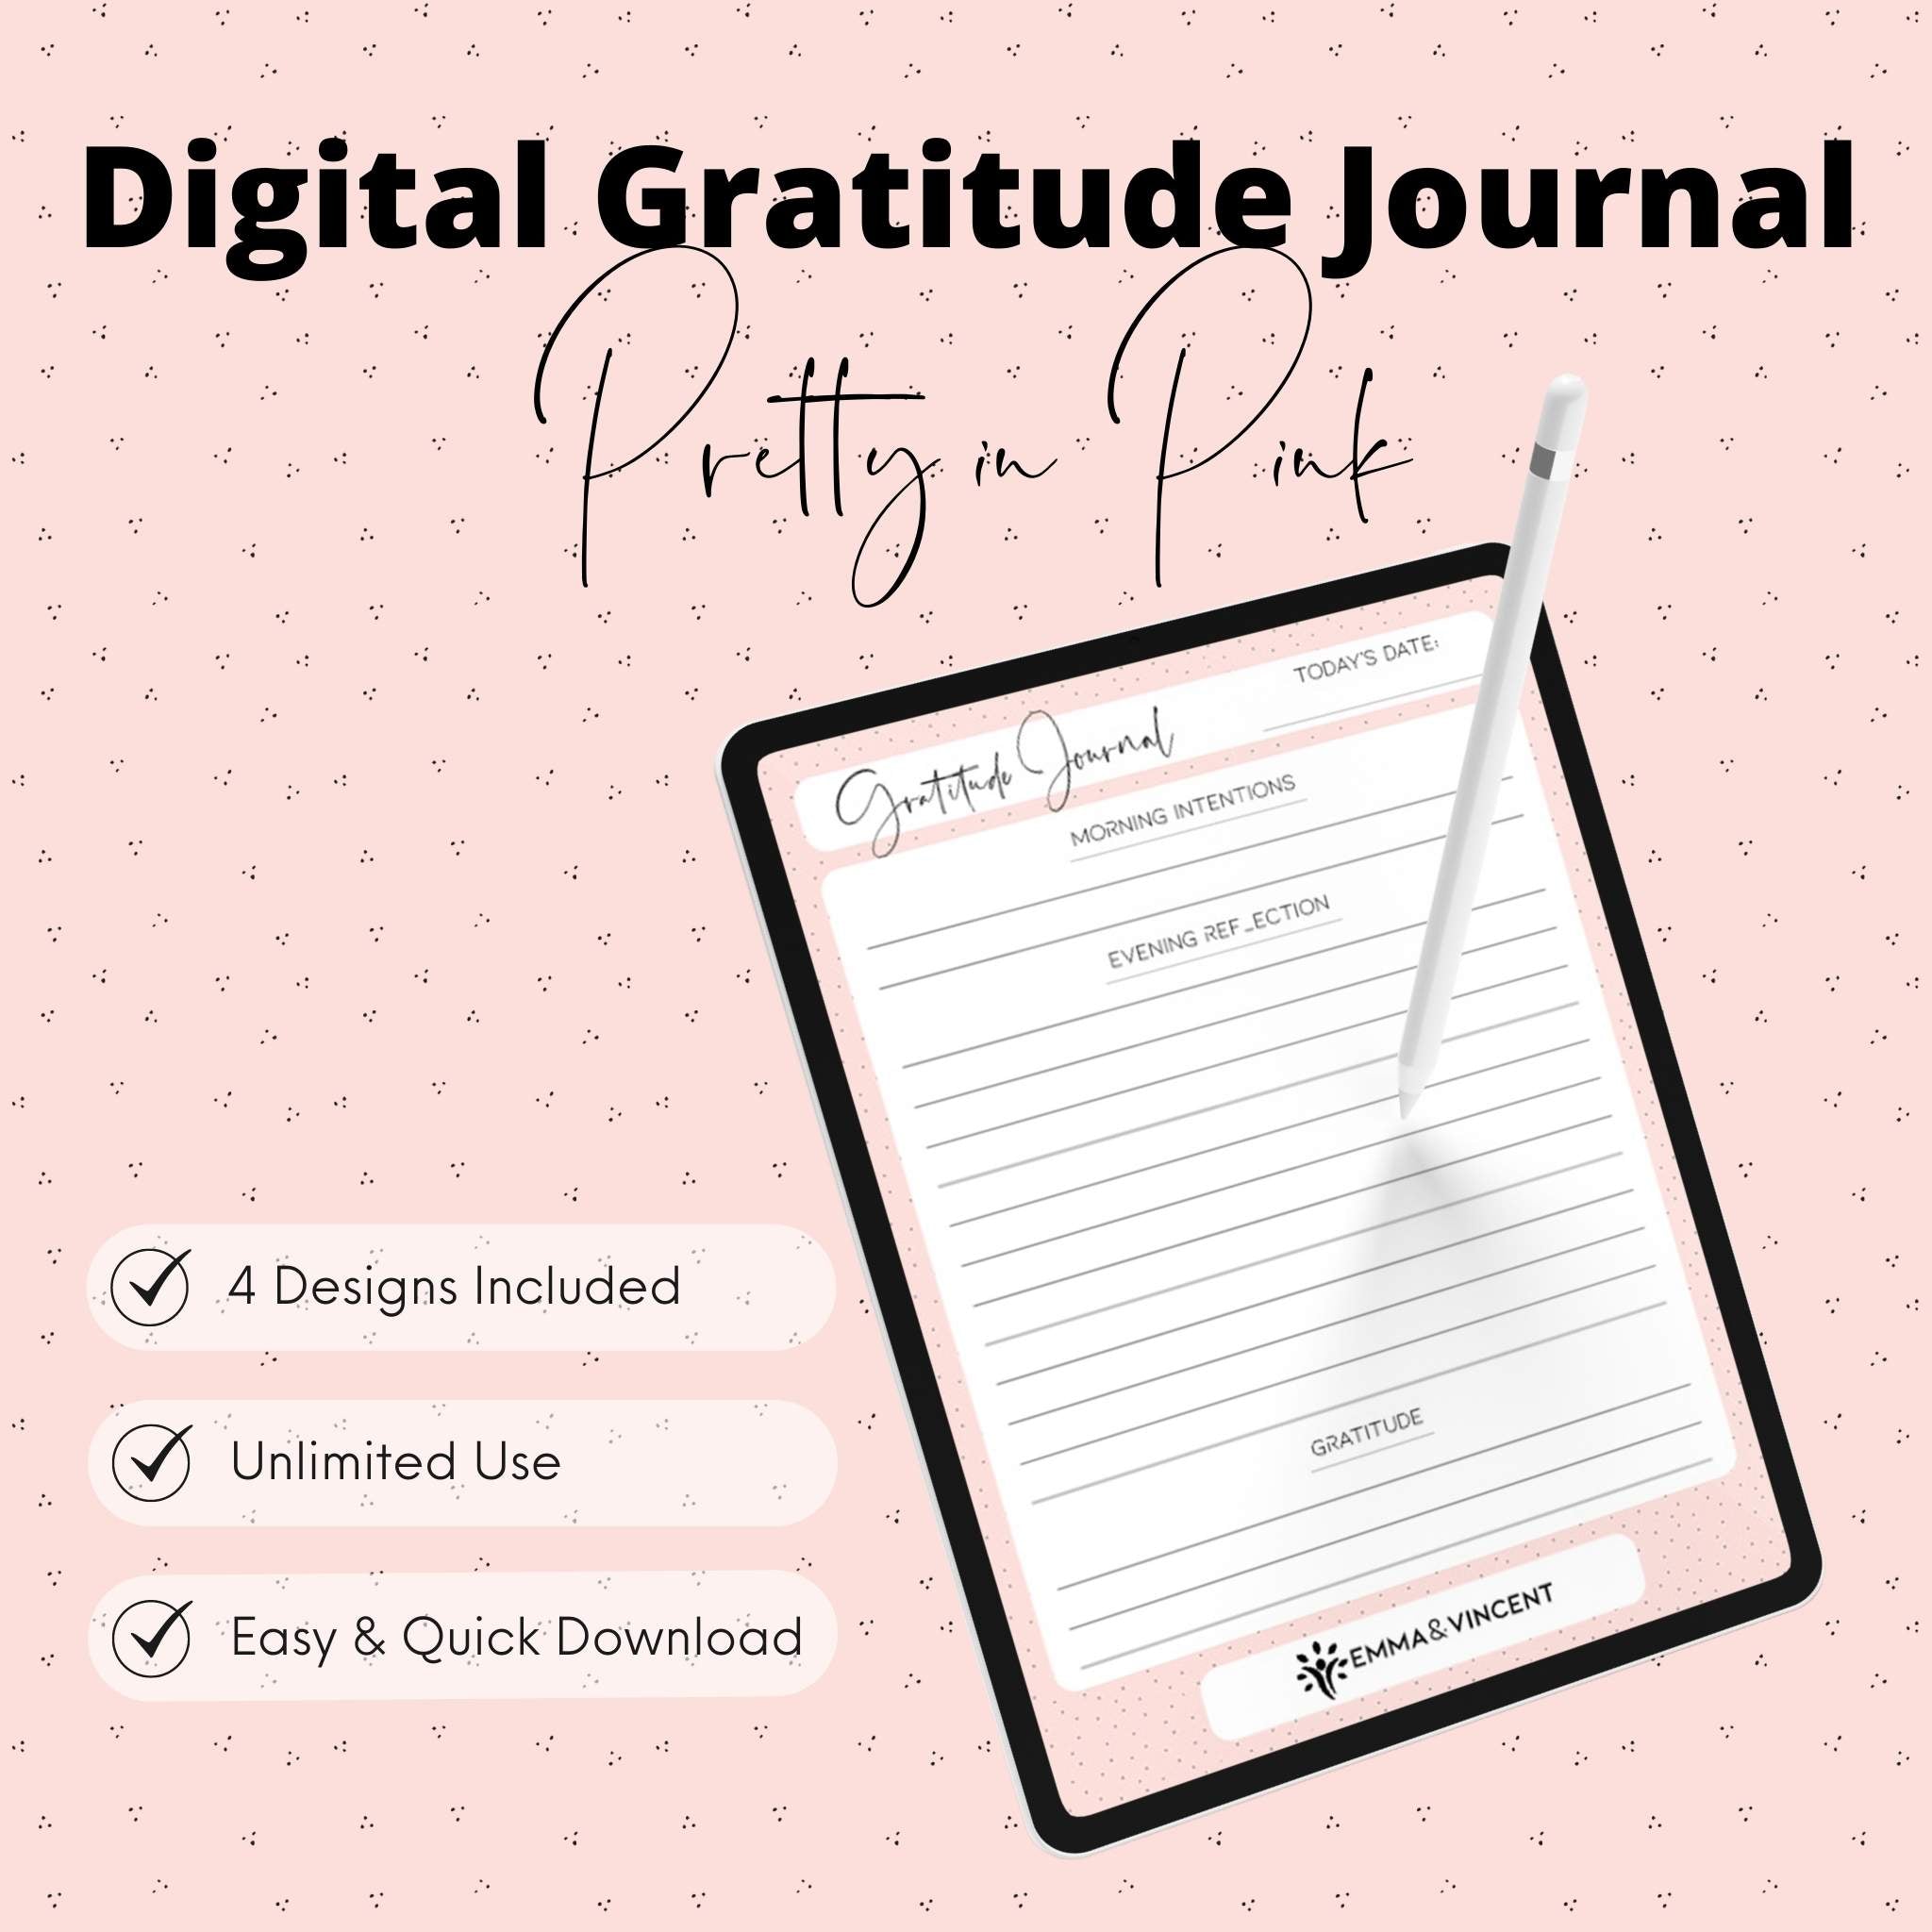 Digital Gratitude Journal - Pretty in Pink - 4 Designs Included!